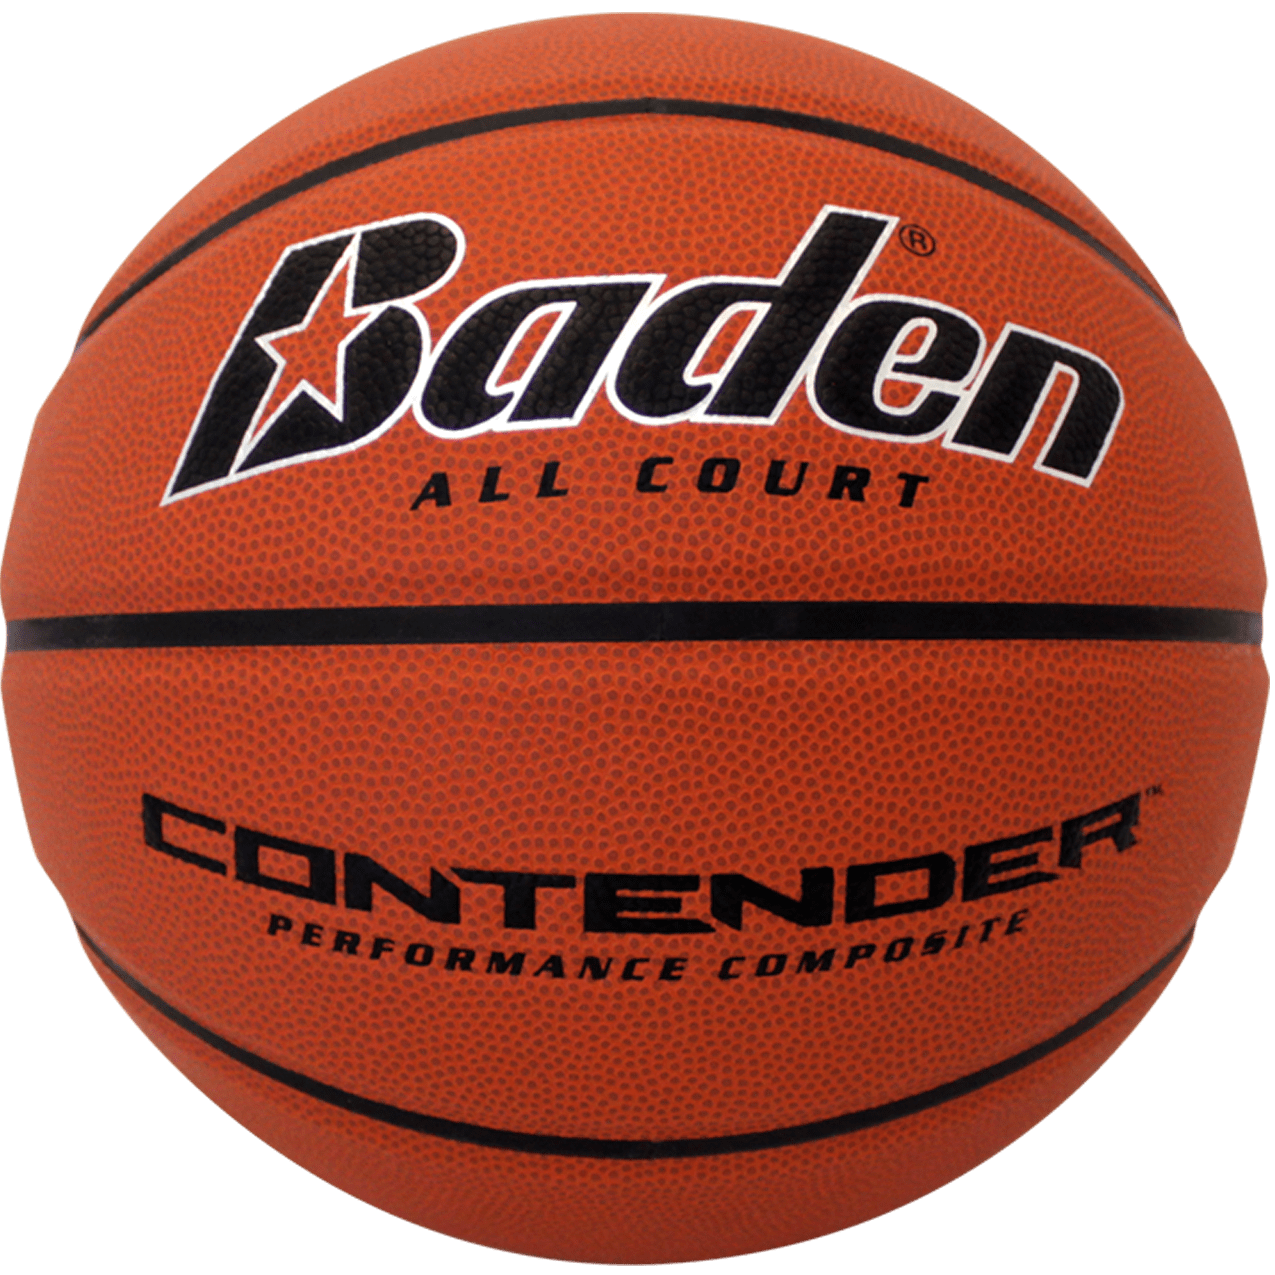 Basketball court, Free Basketball s, sport, orange png